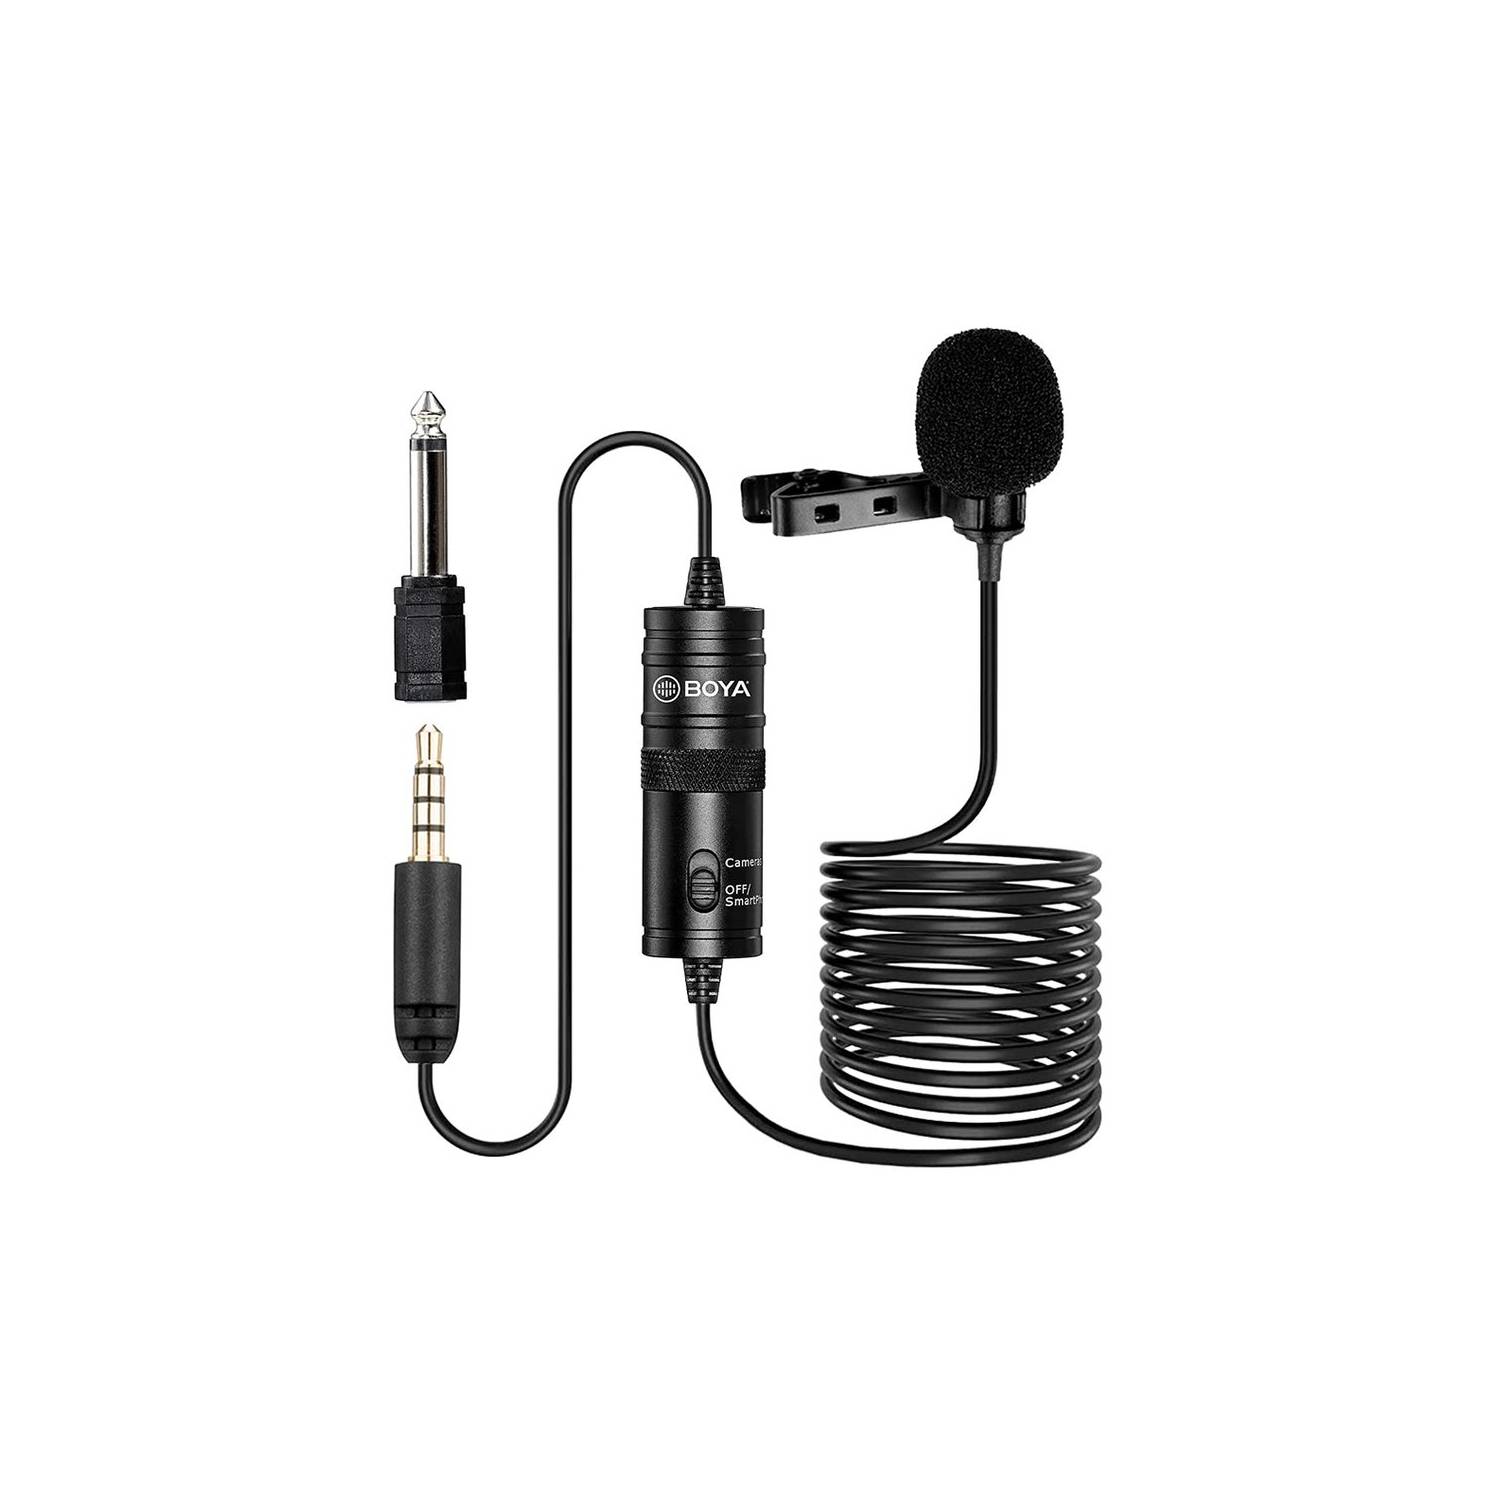 Micrófono solapa de condensador, boya by-m1, cable 6 metros